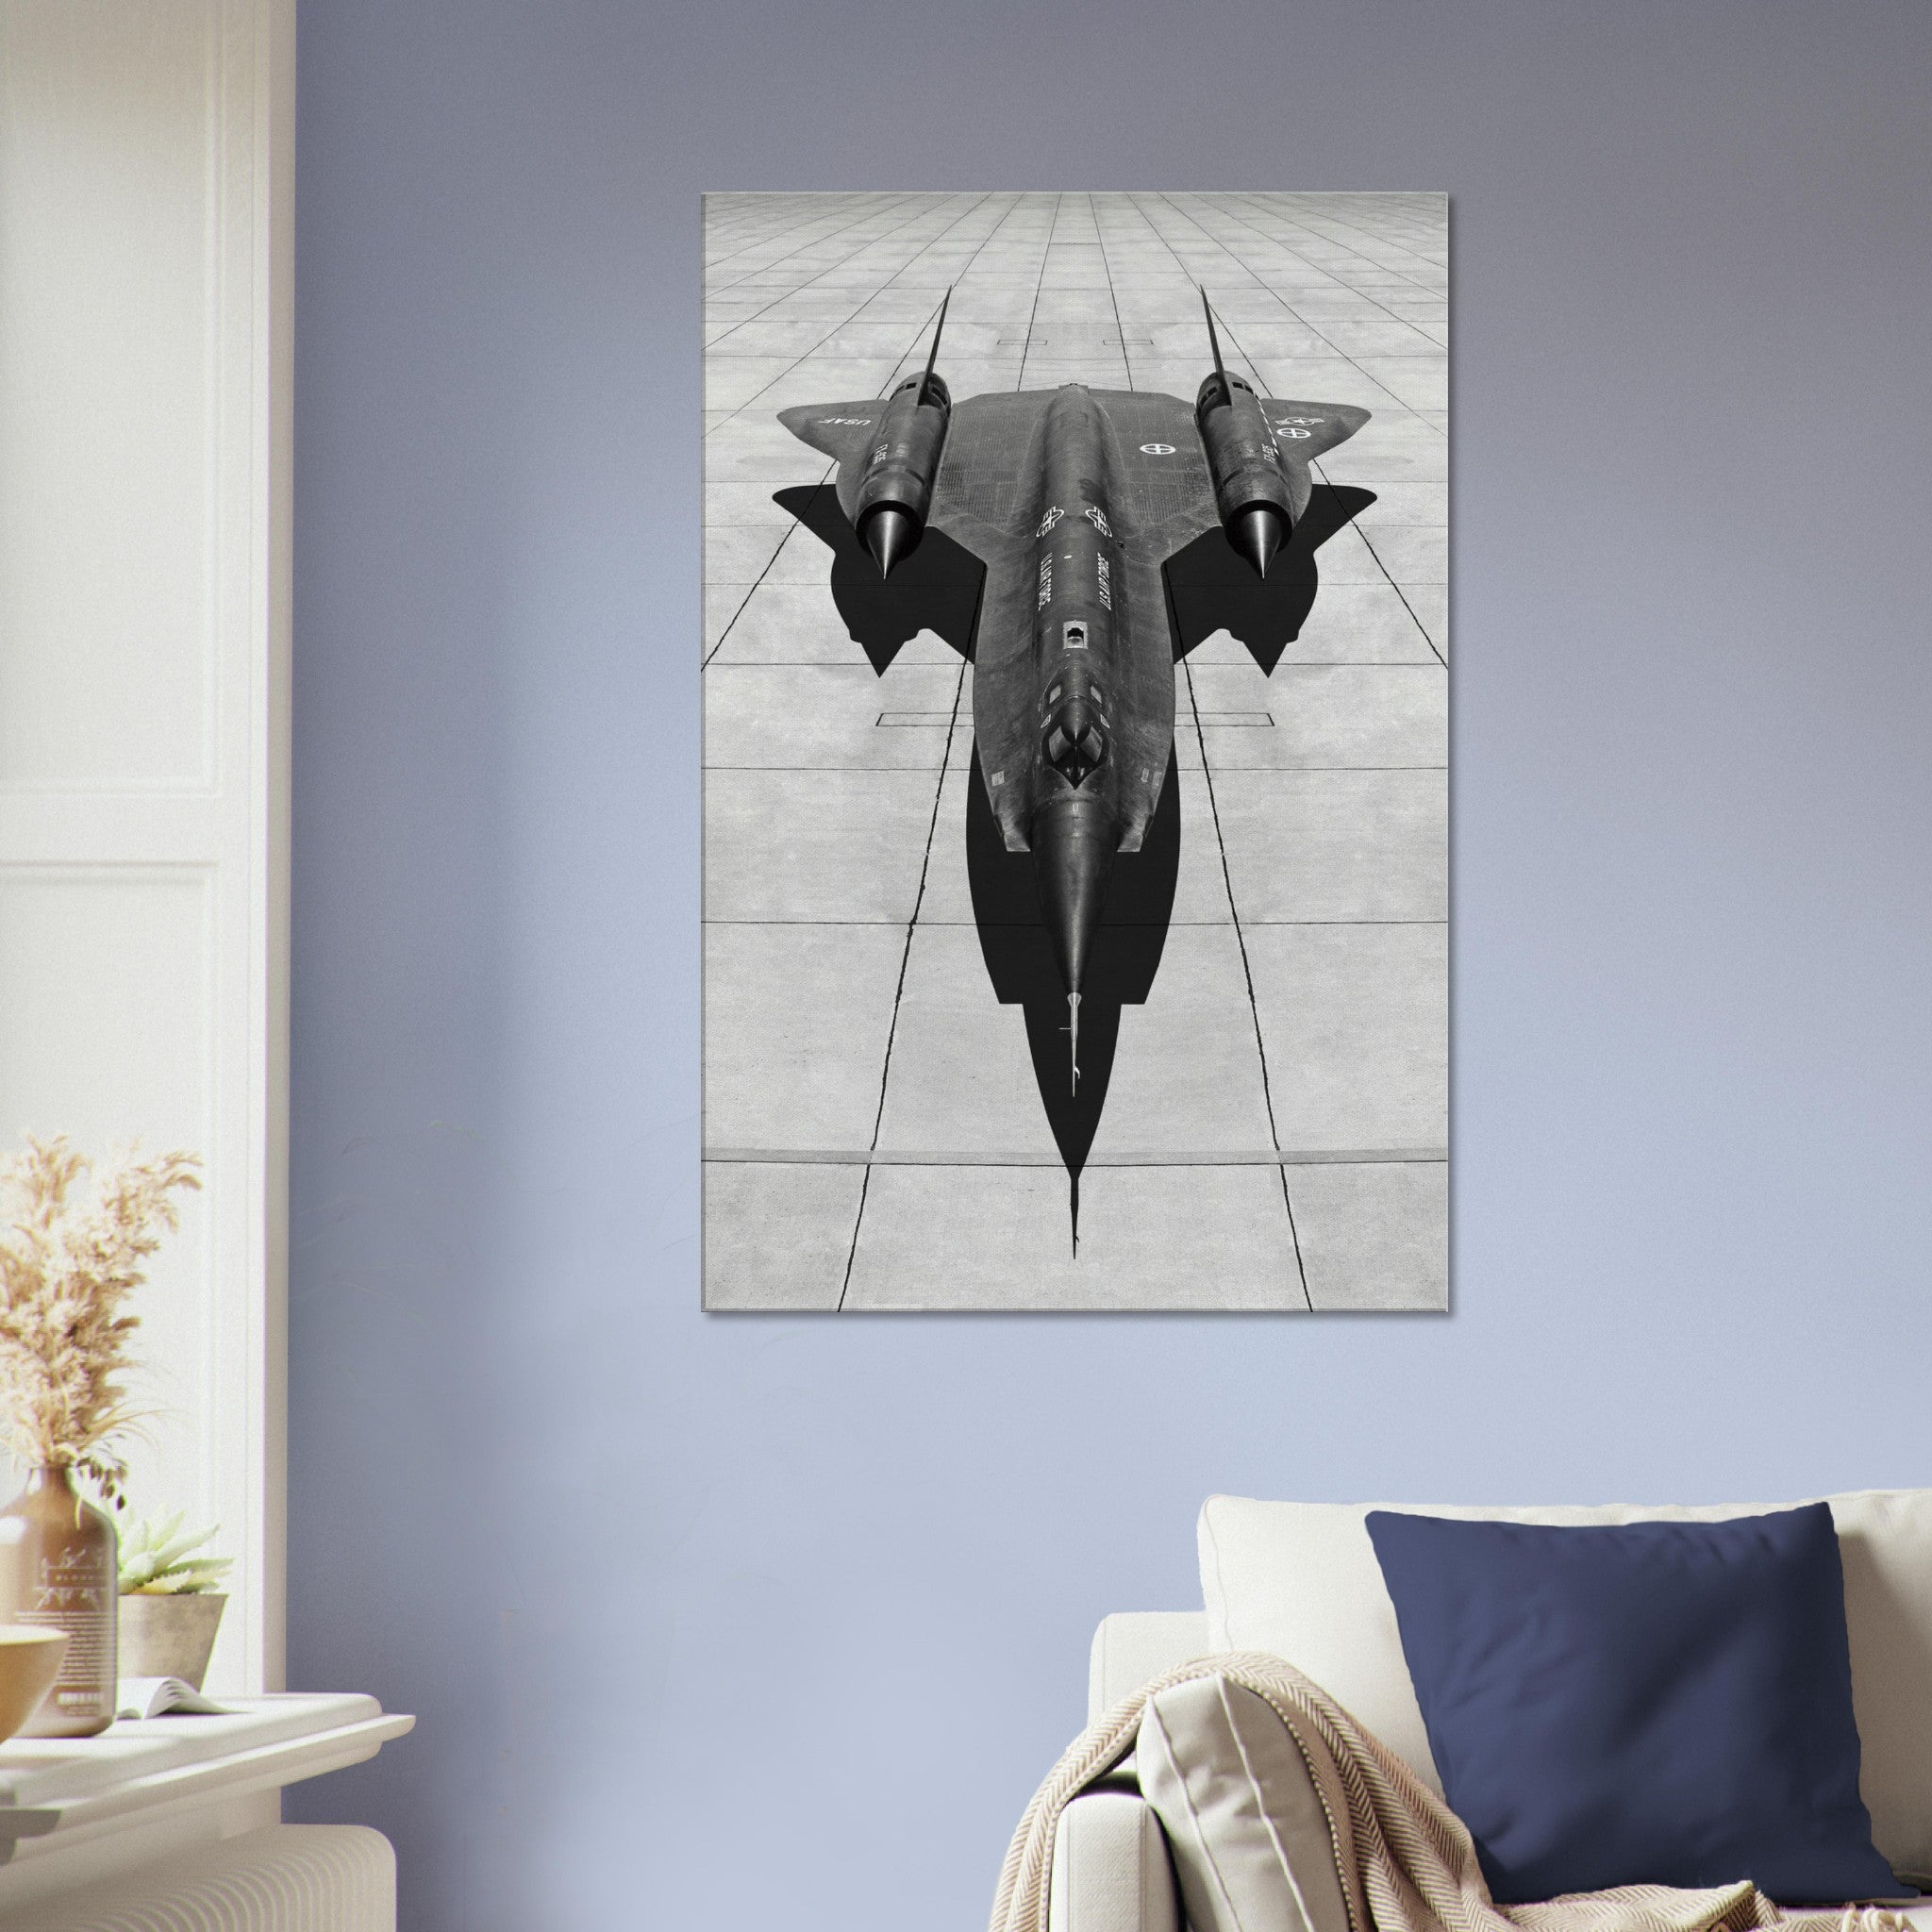 SR-71 "Blackbird" on Canvas - I Love a Hangar